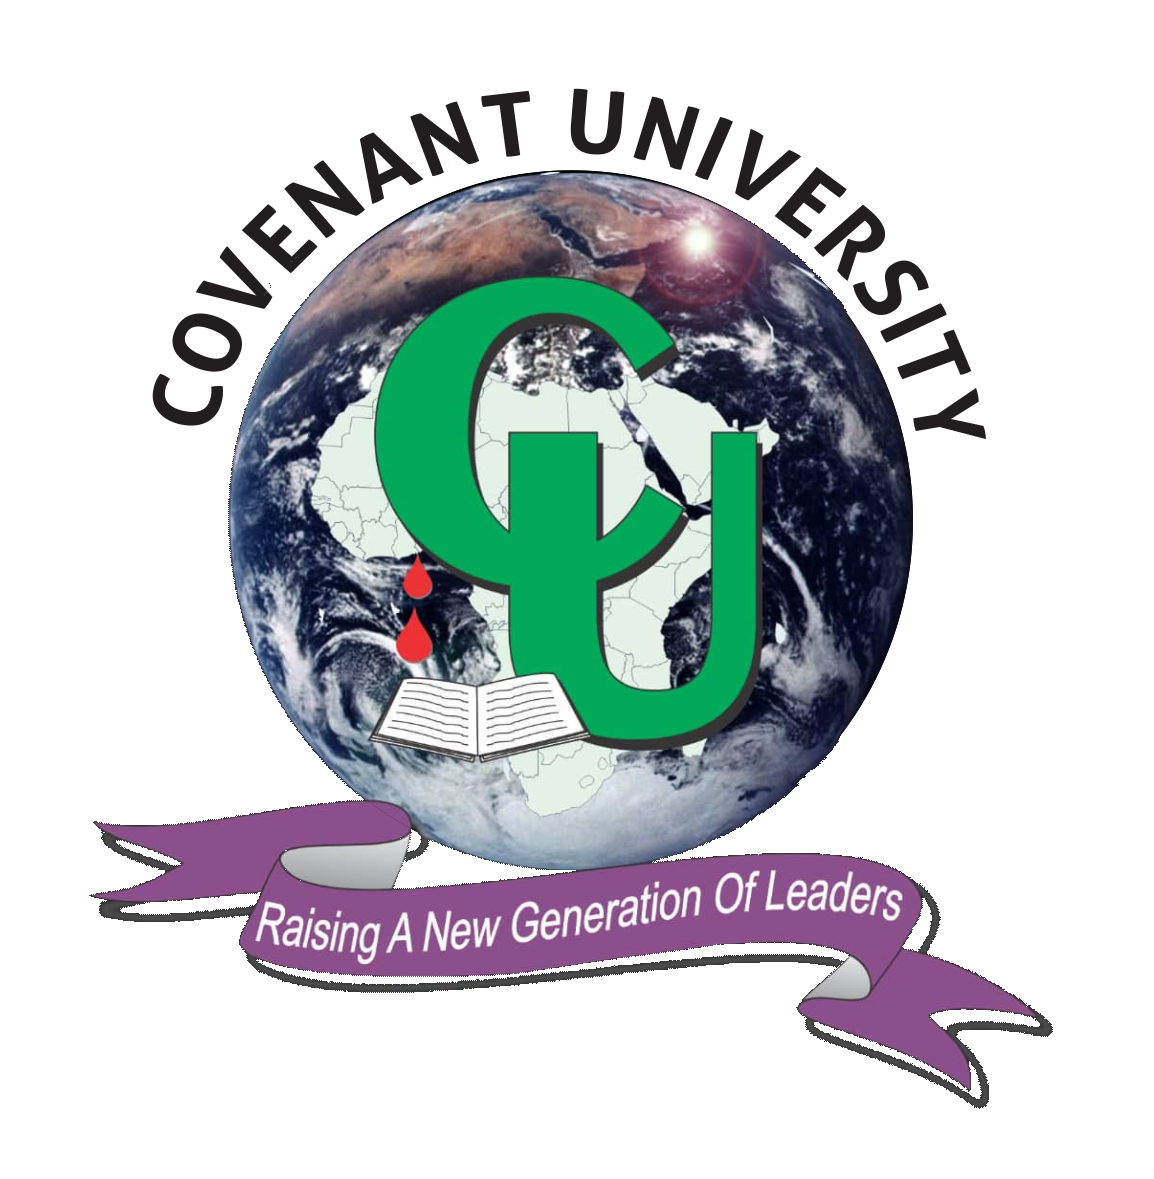 Covenant university whatsapp group link. www.eremmel.com